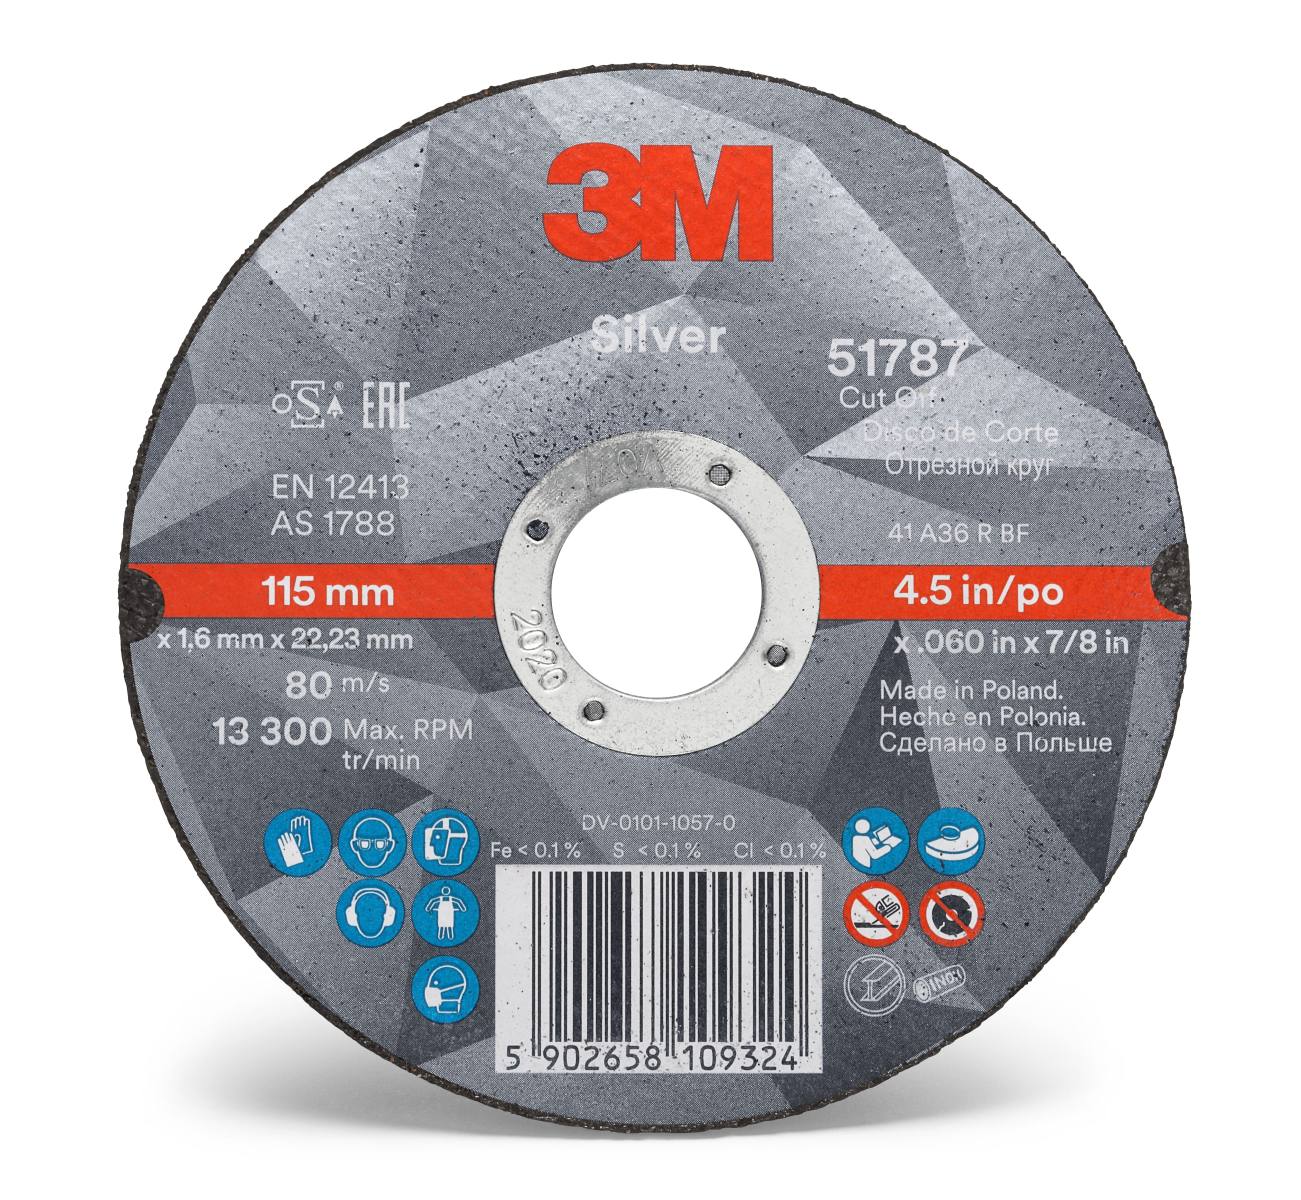 3M Silver Cut-Off Wheel Trennscheibe, 100 mm, 1,0 mm, 6 mm, T41, 51771